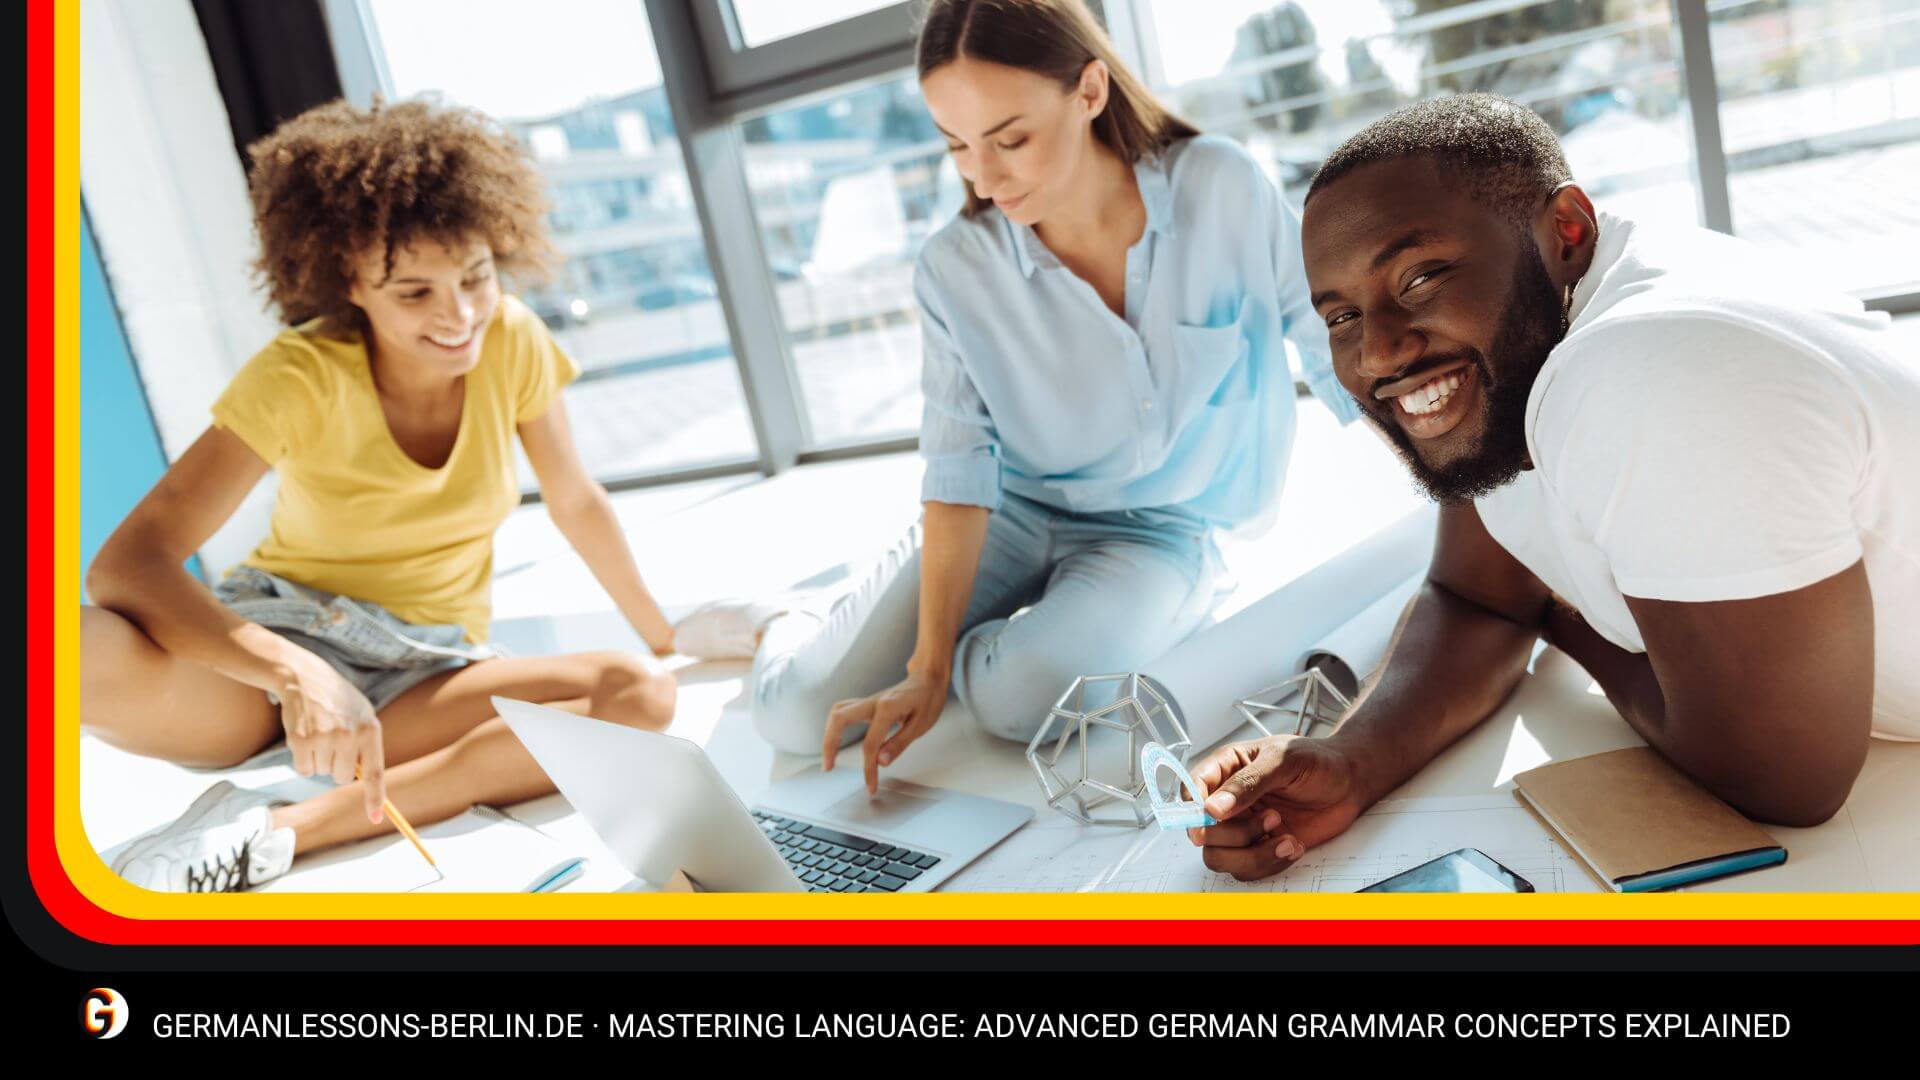 Mastering Language: Advanced German Grammar Concepts Explained